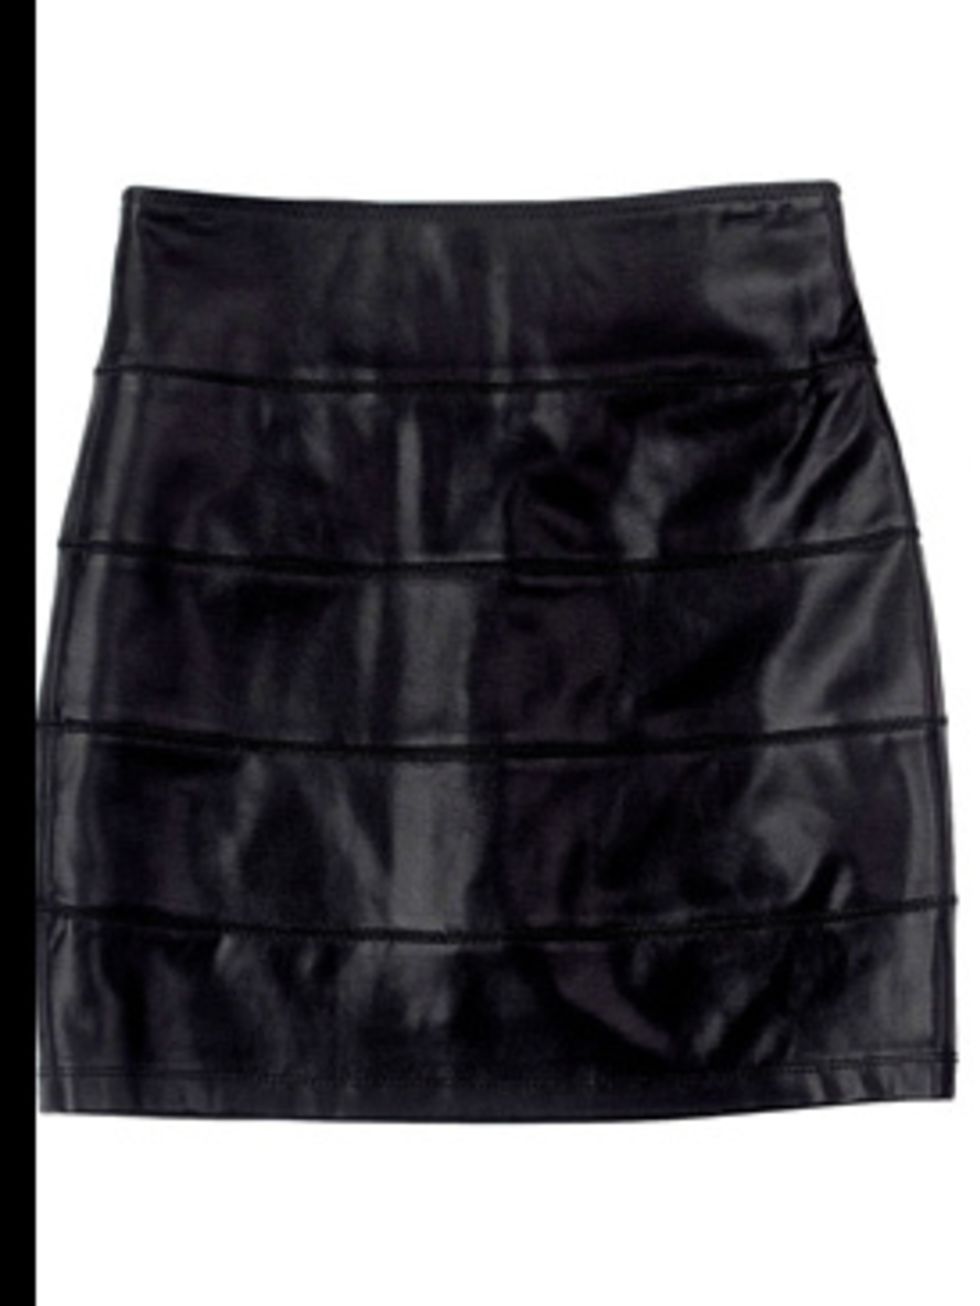 <p>Skirt, £146.81 by La Rok at <a href="http://www.bunnyhug.co.uk/fashionshop/gbu0-prodshow/LaRok_Level_2_Faux_Leather_Black_Mini_Skirt.html?source=shopstyle">BunnyHug</a></p>